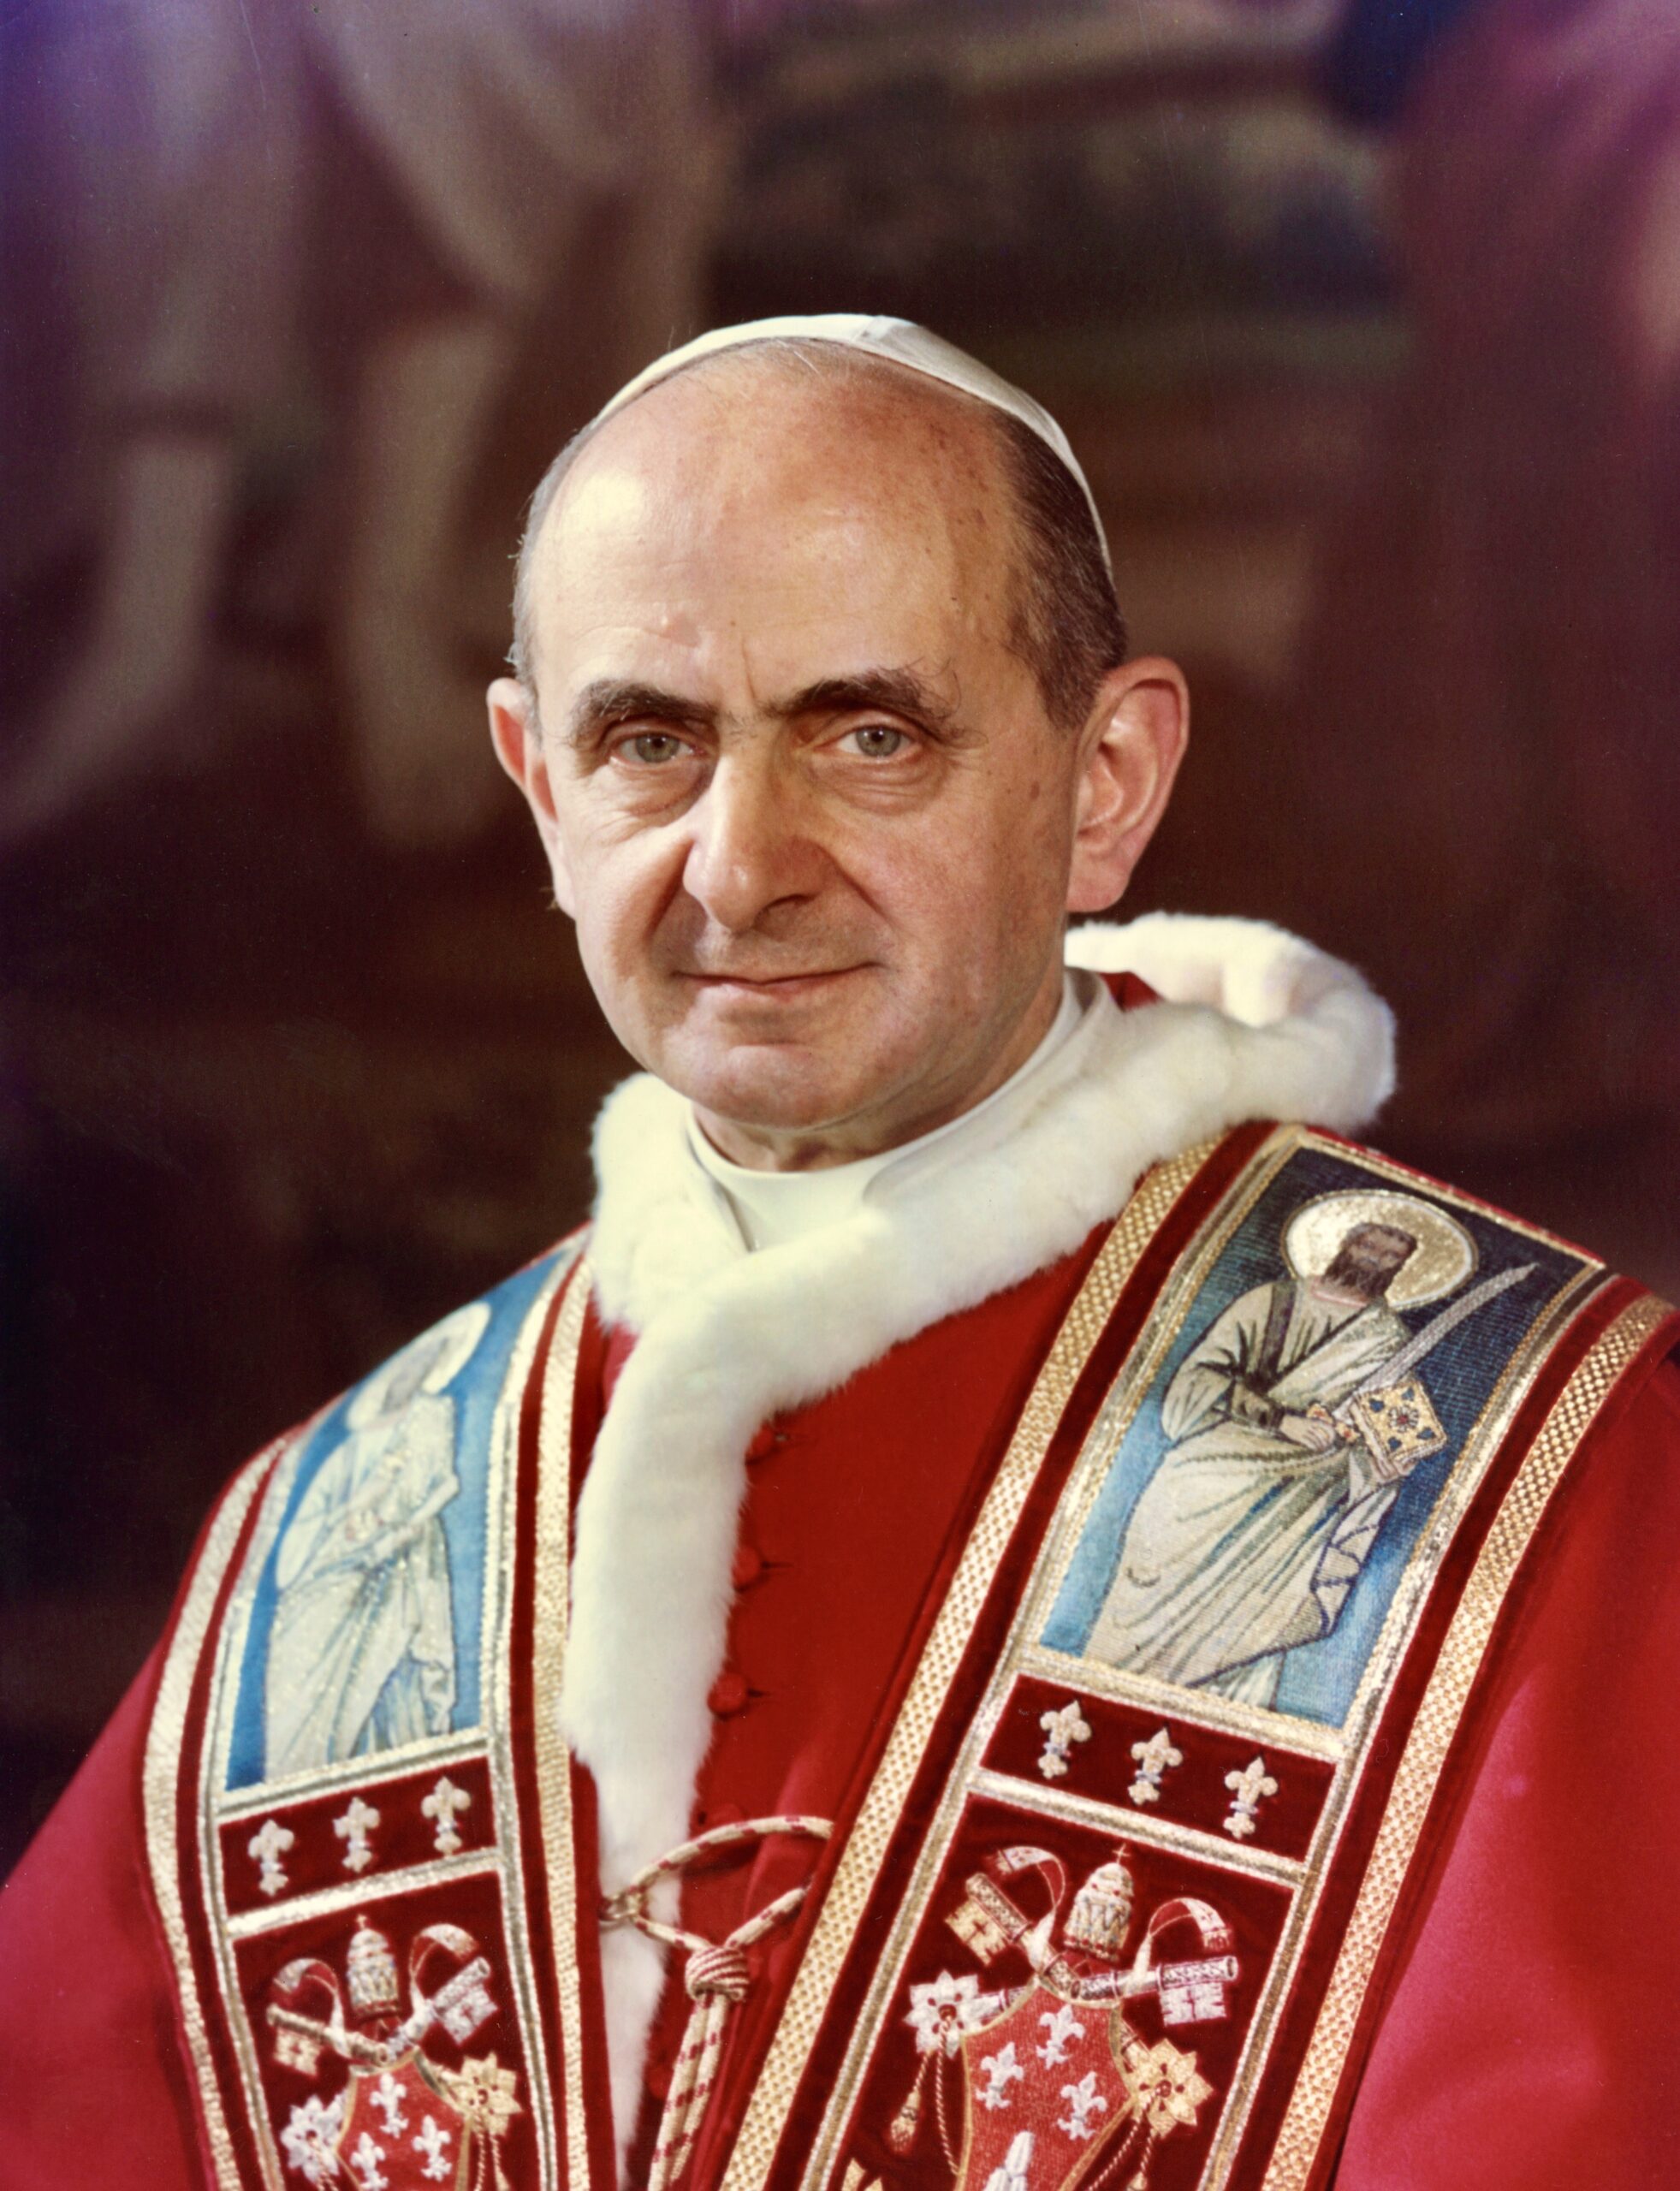 Saint Pope Paul VI speaks to the Renewal